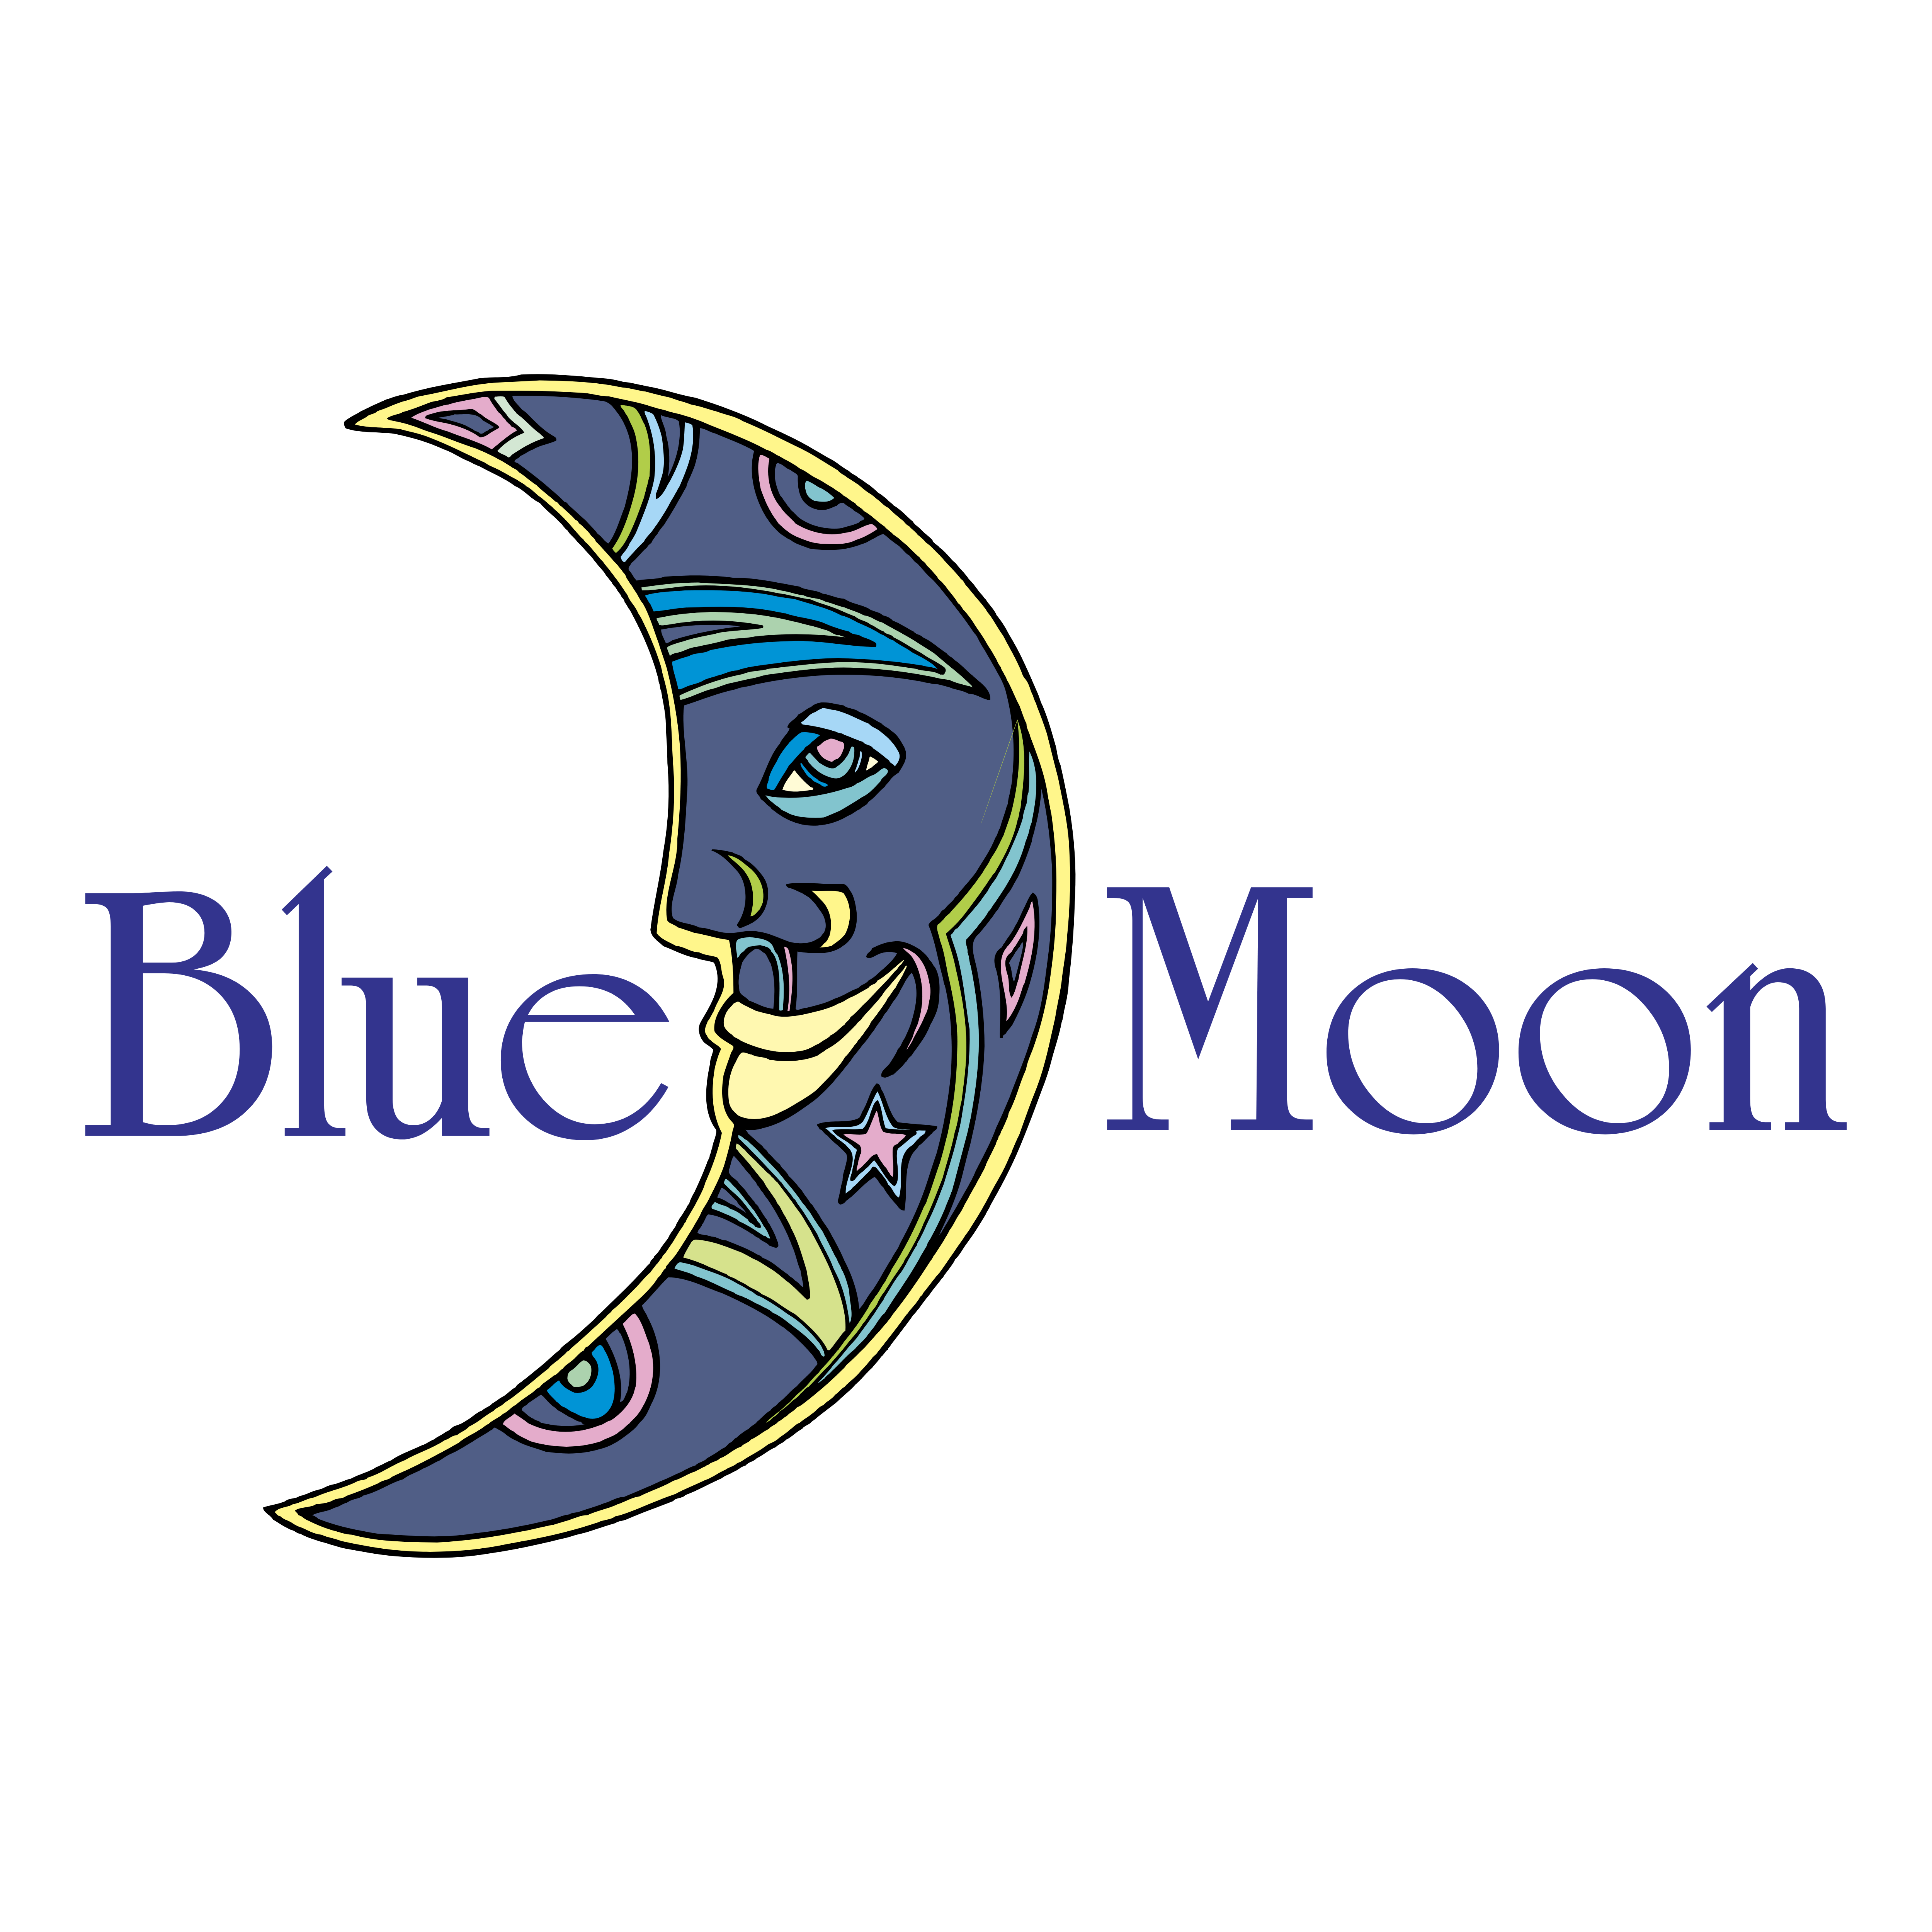 Blue Moon Logo - Blue Moon – Logos Download